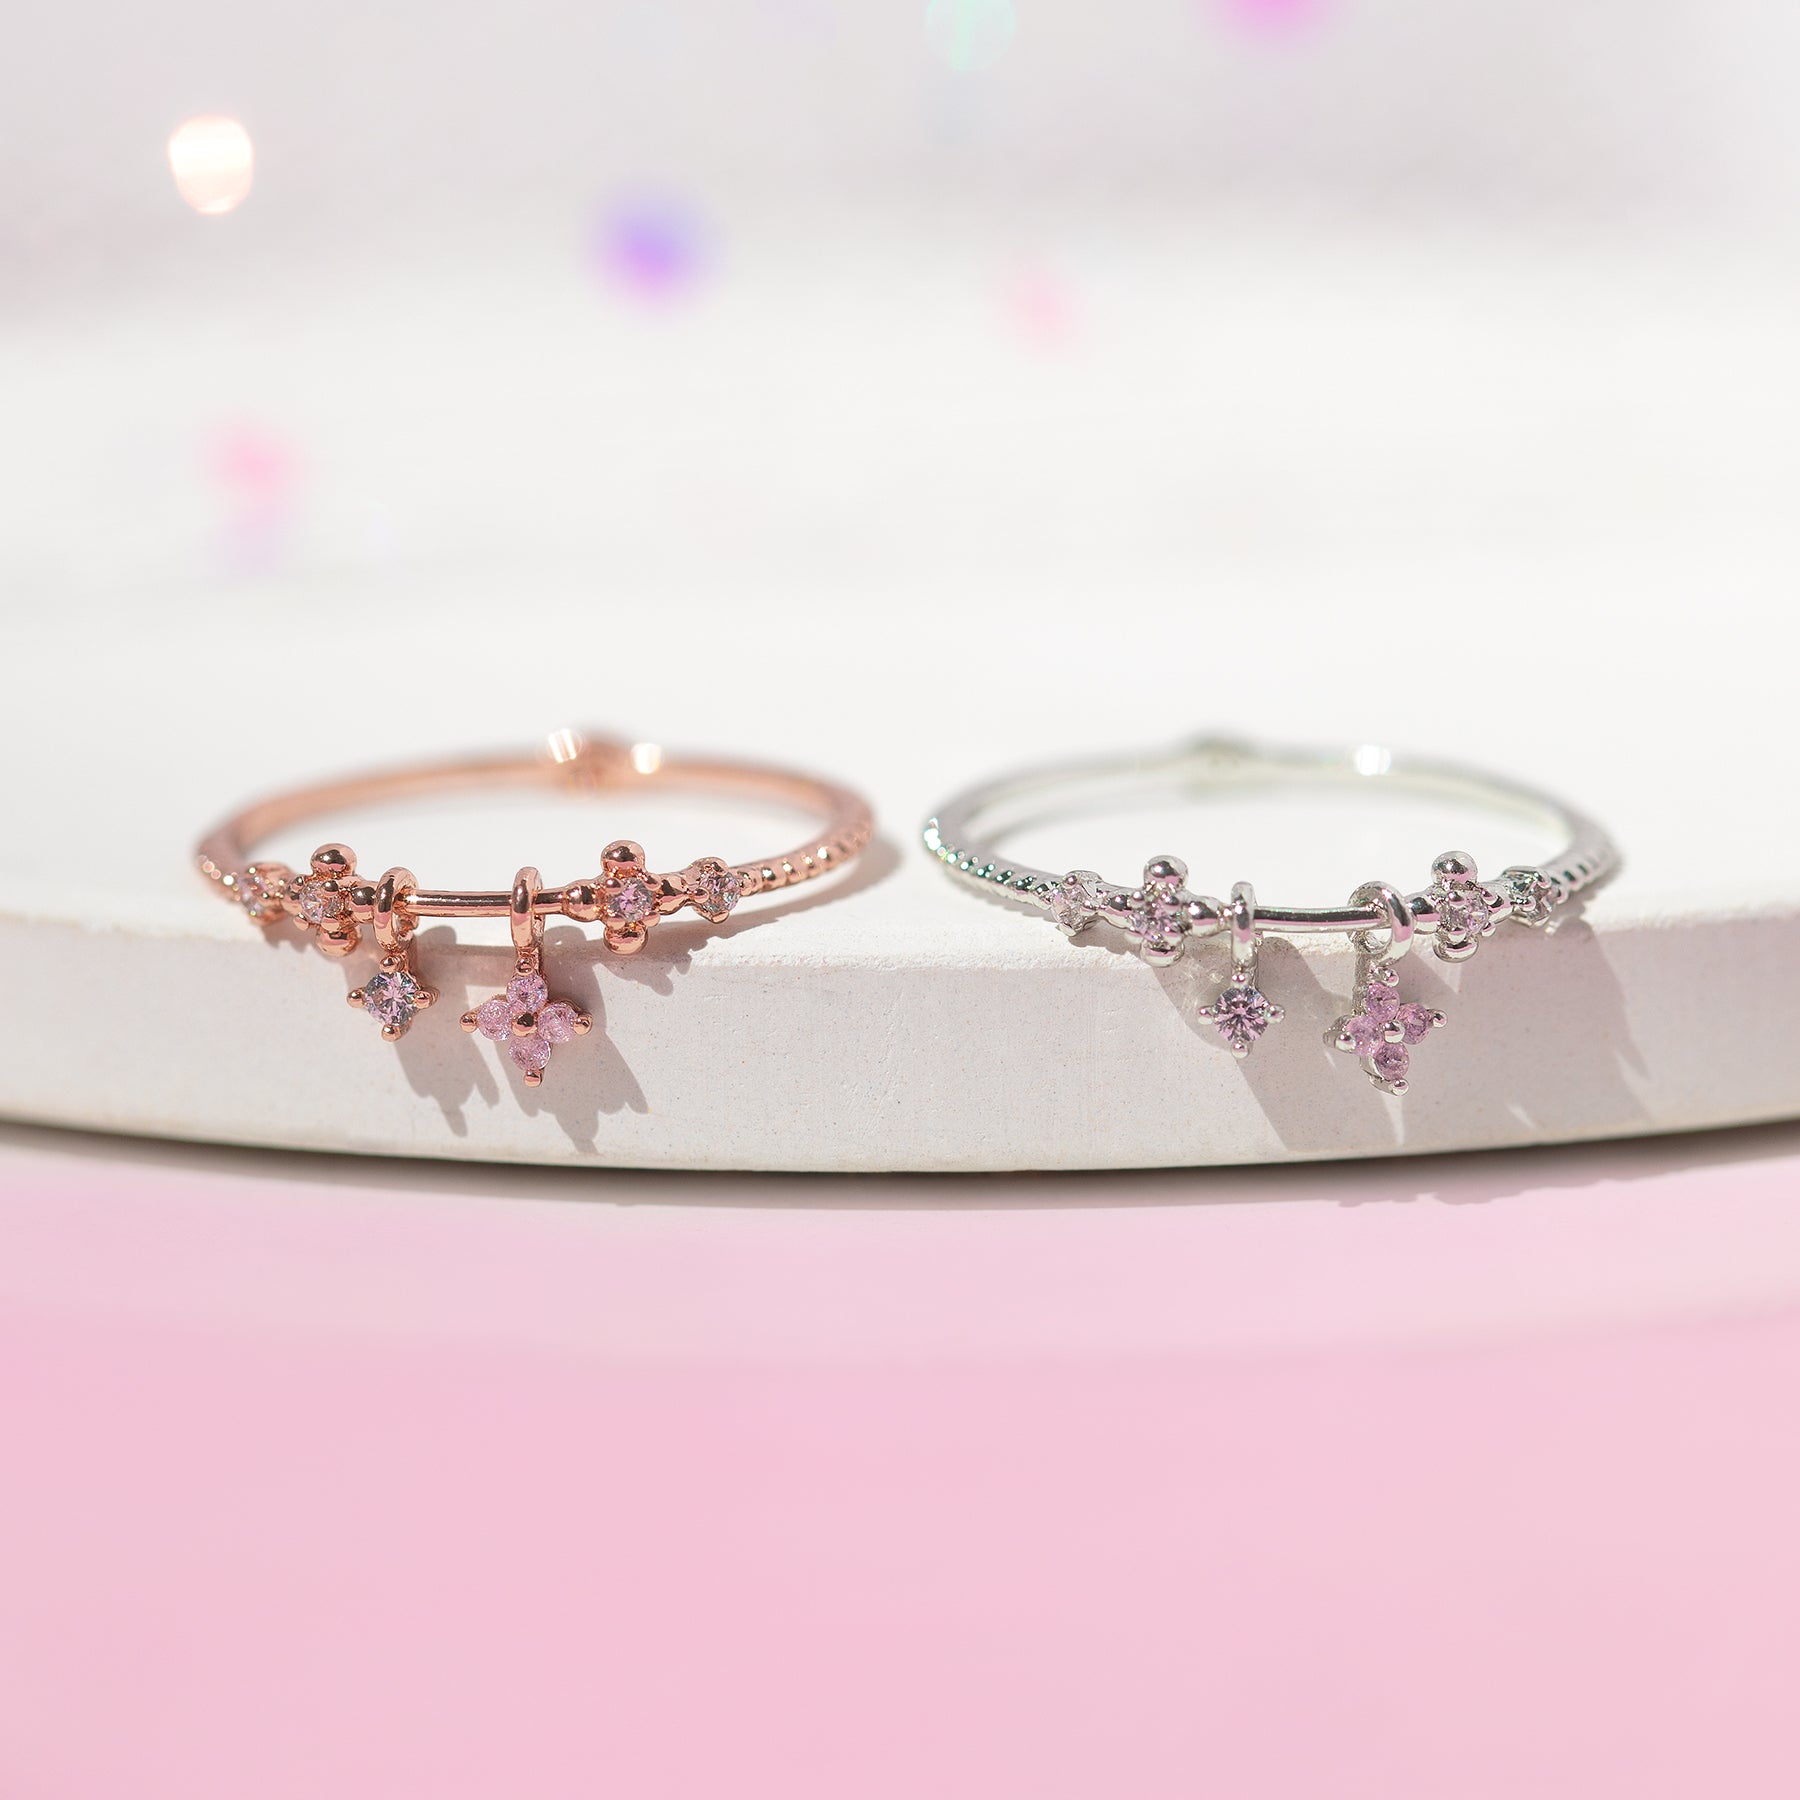 Charmed Blossom Ring